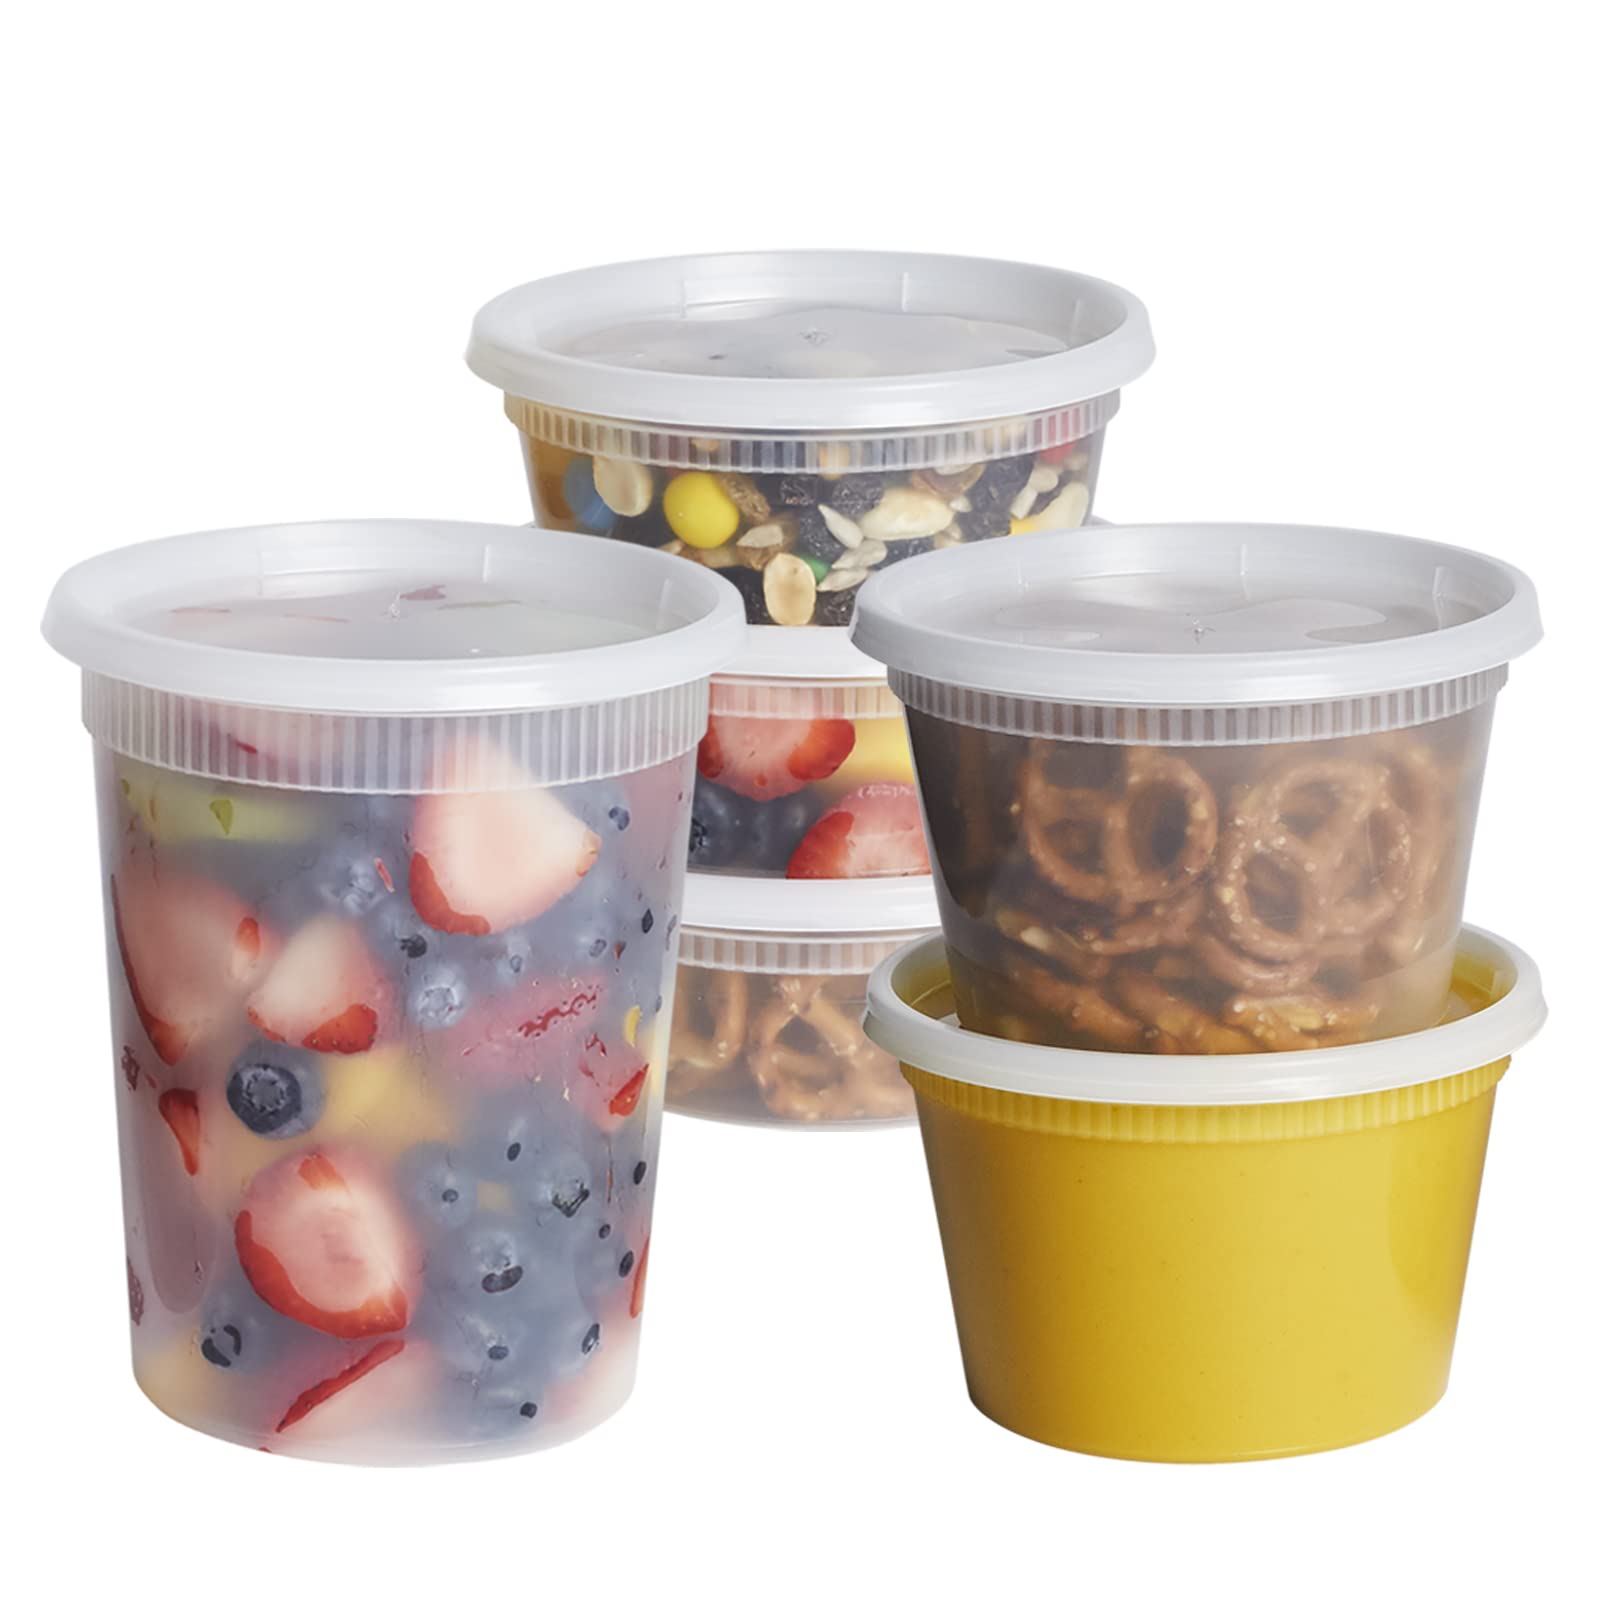 Reli. Deli Containers with Lids (100 Sets bulk), 8 oz | Plastic Deli Containers with Lids 8oz | Clear Soup Containers with Li